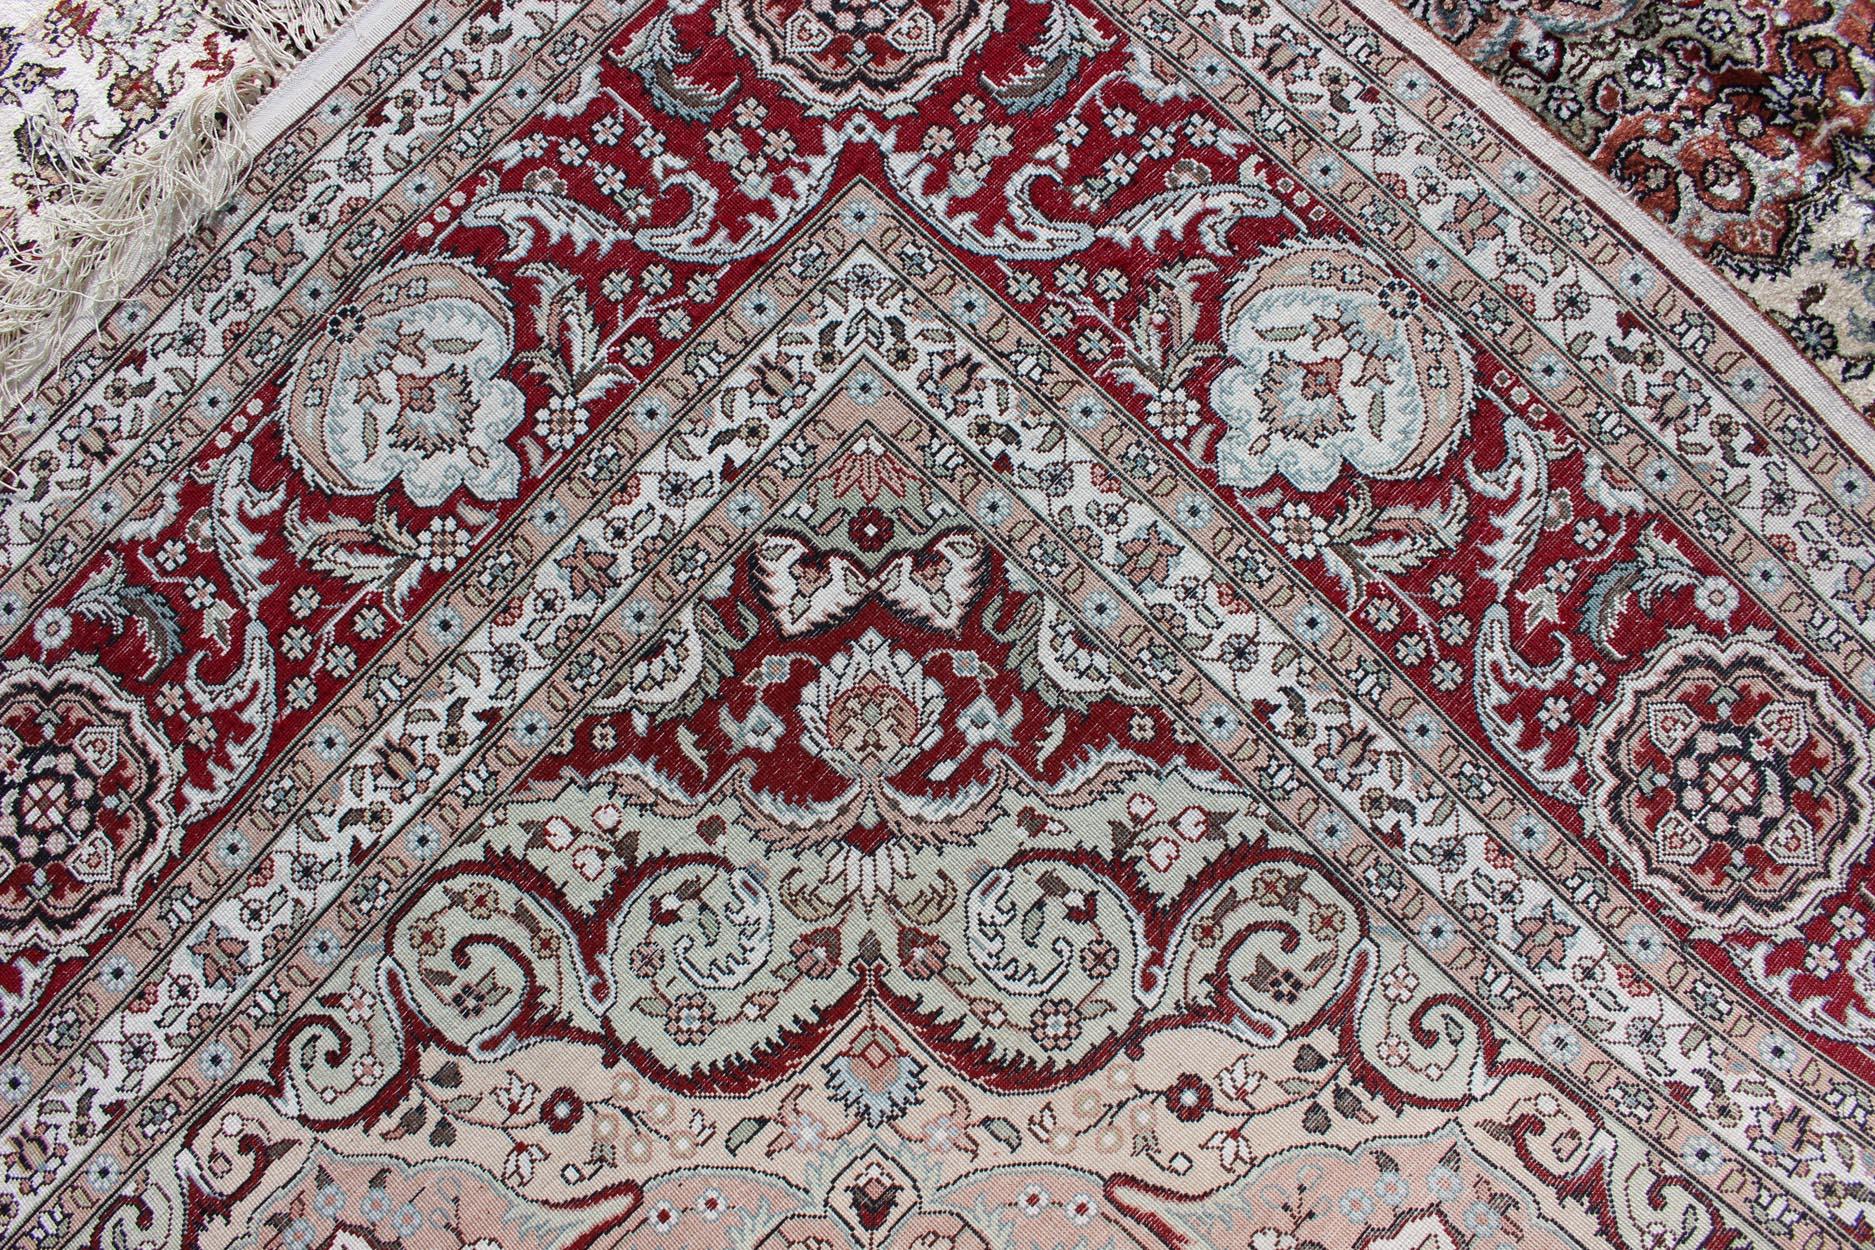 Tabriz Silk Vintage Isfahan Design Medallion Carpet with Intricate Floral Elements For Sale